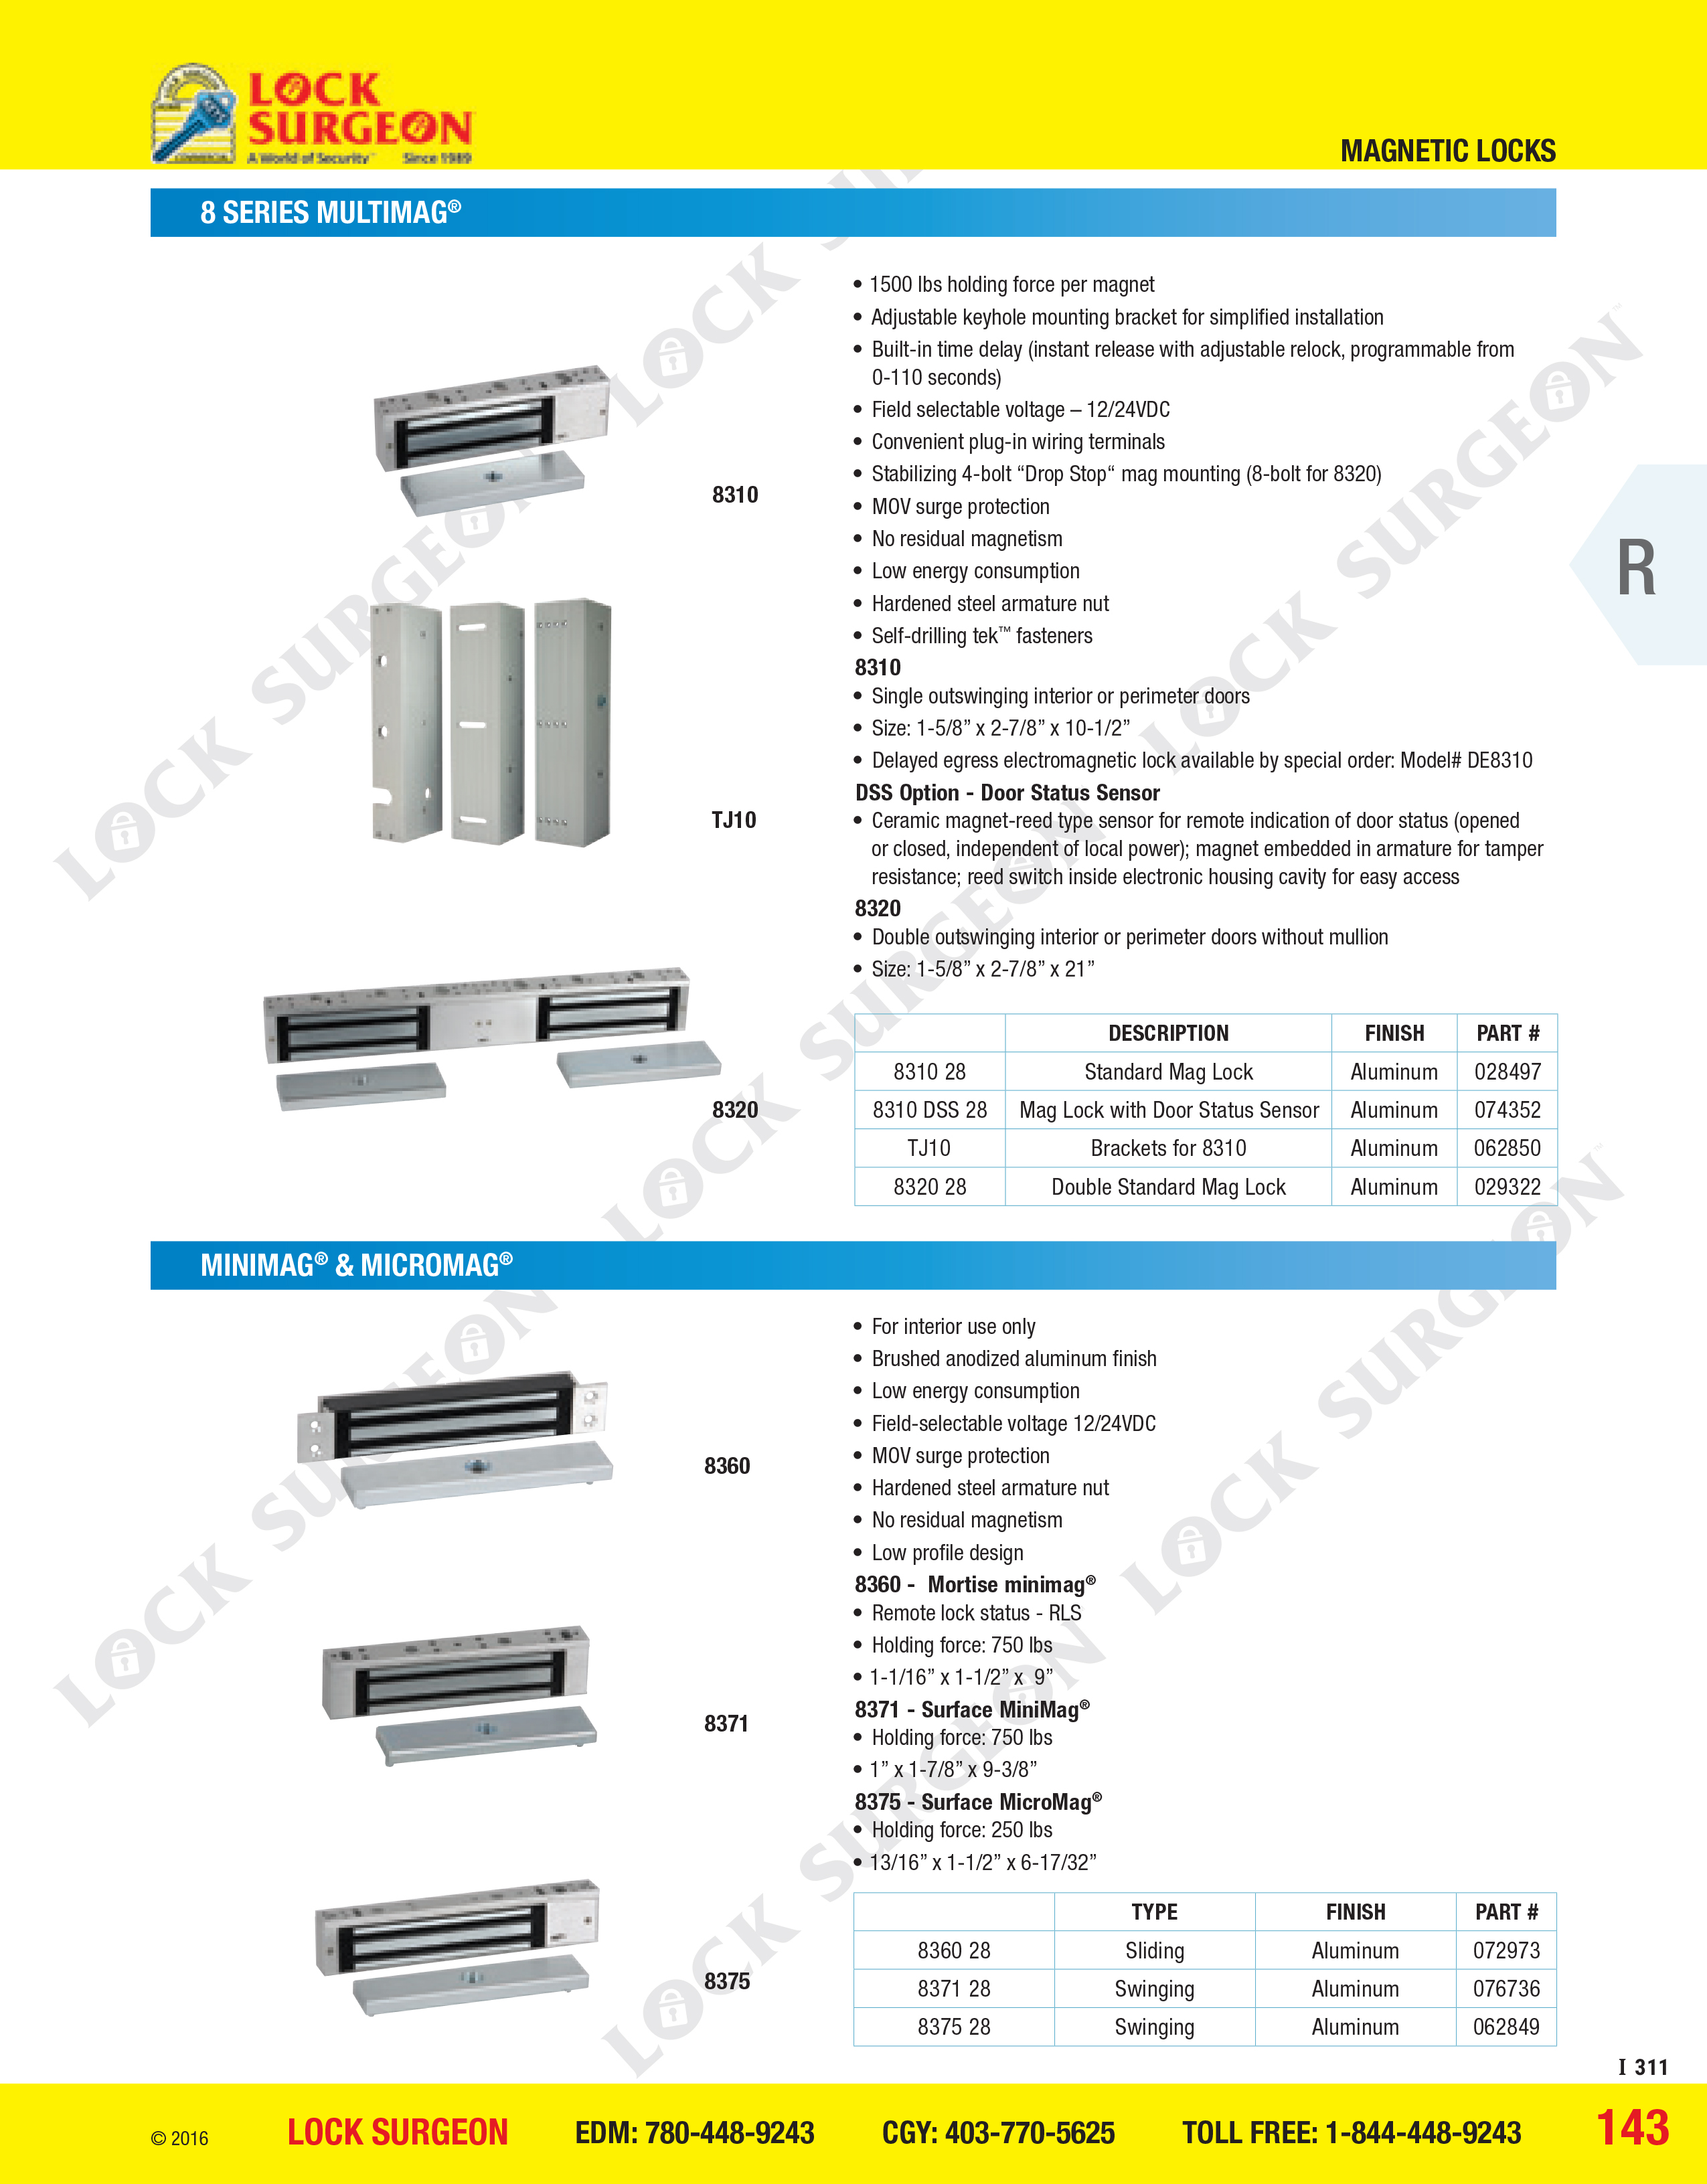 Acheson Magnetic locks 8-series multi-mag mini-mag and micro-mag.